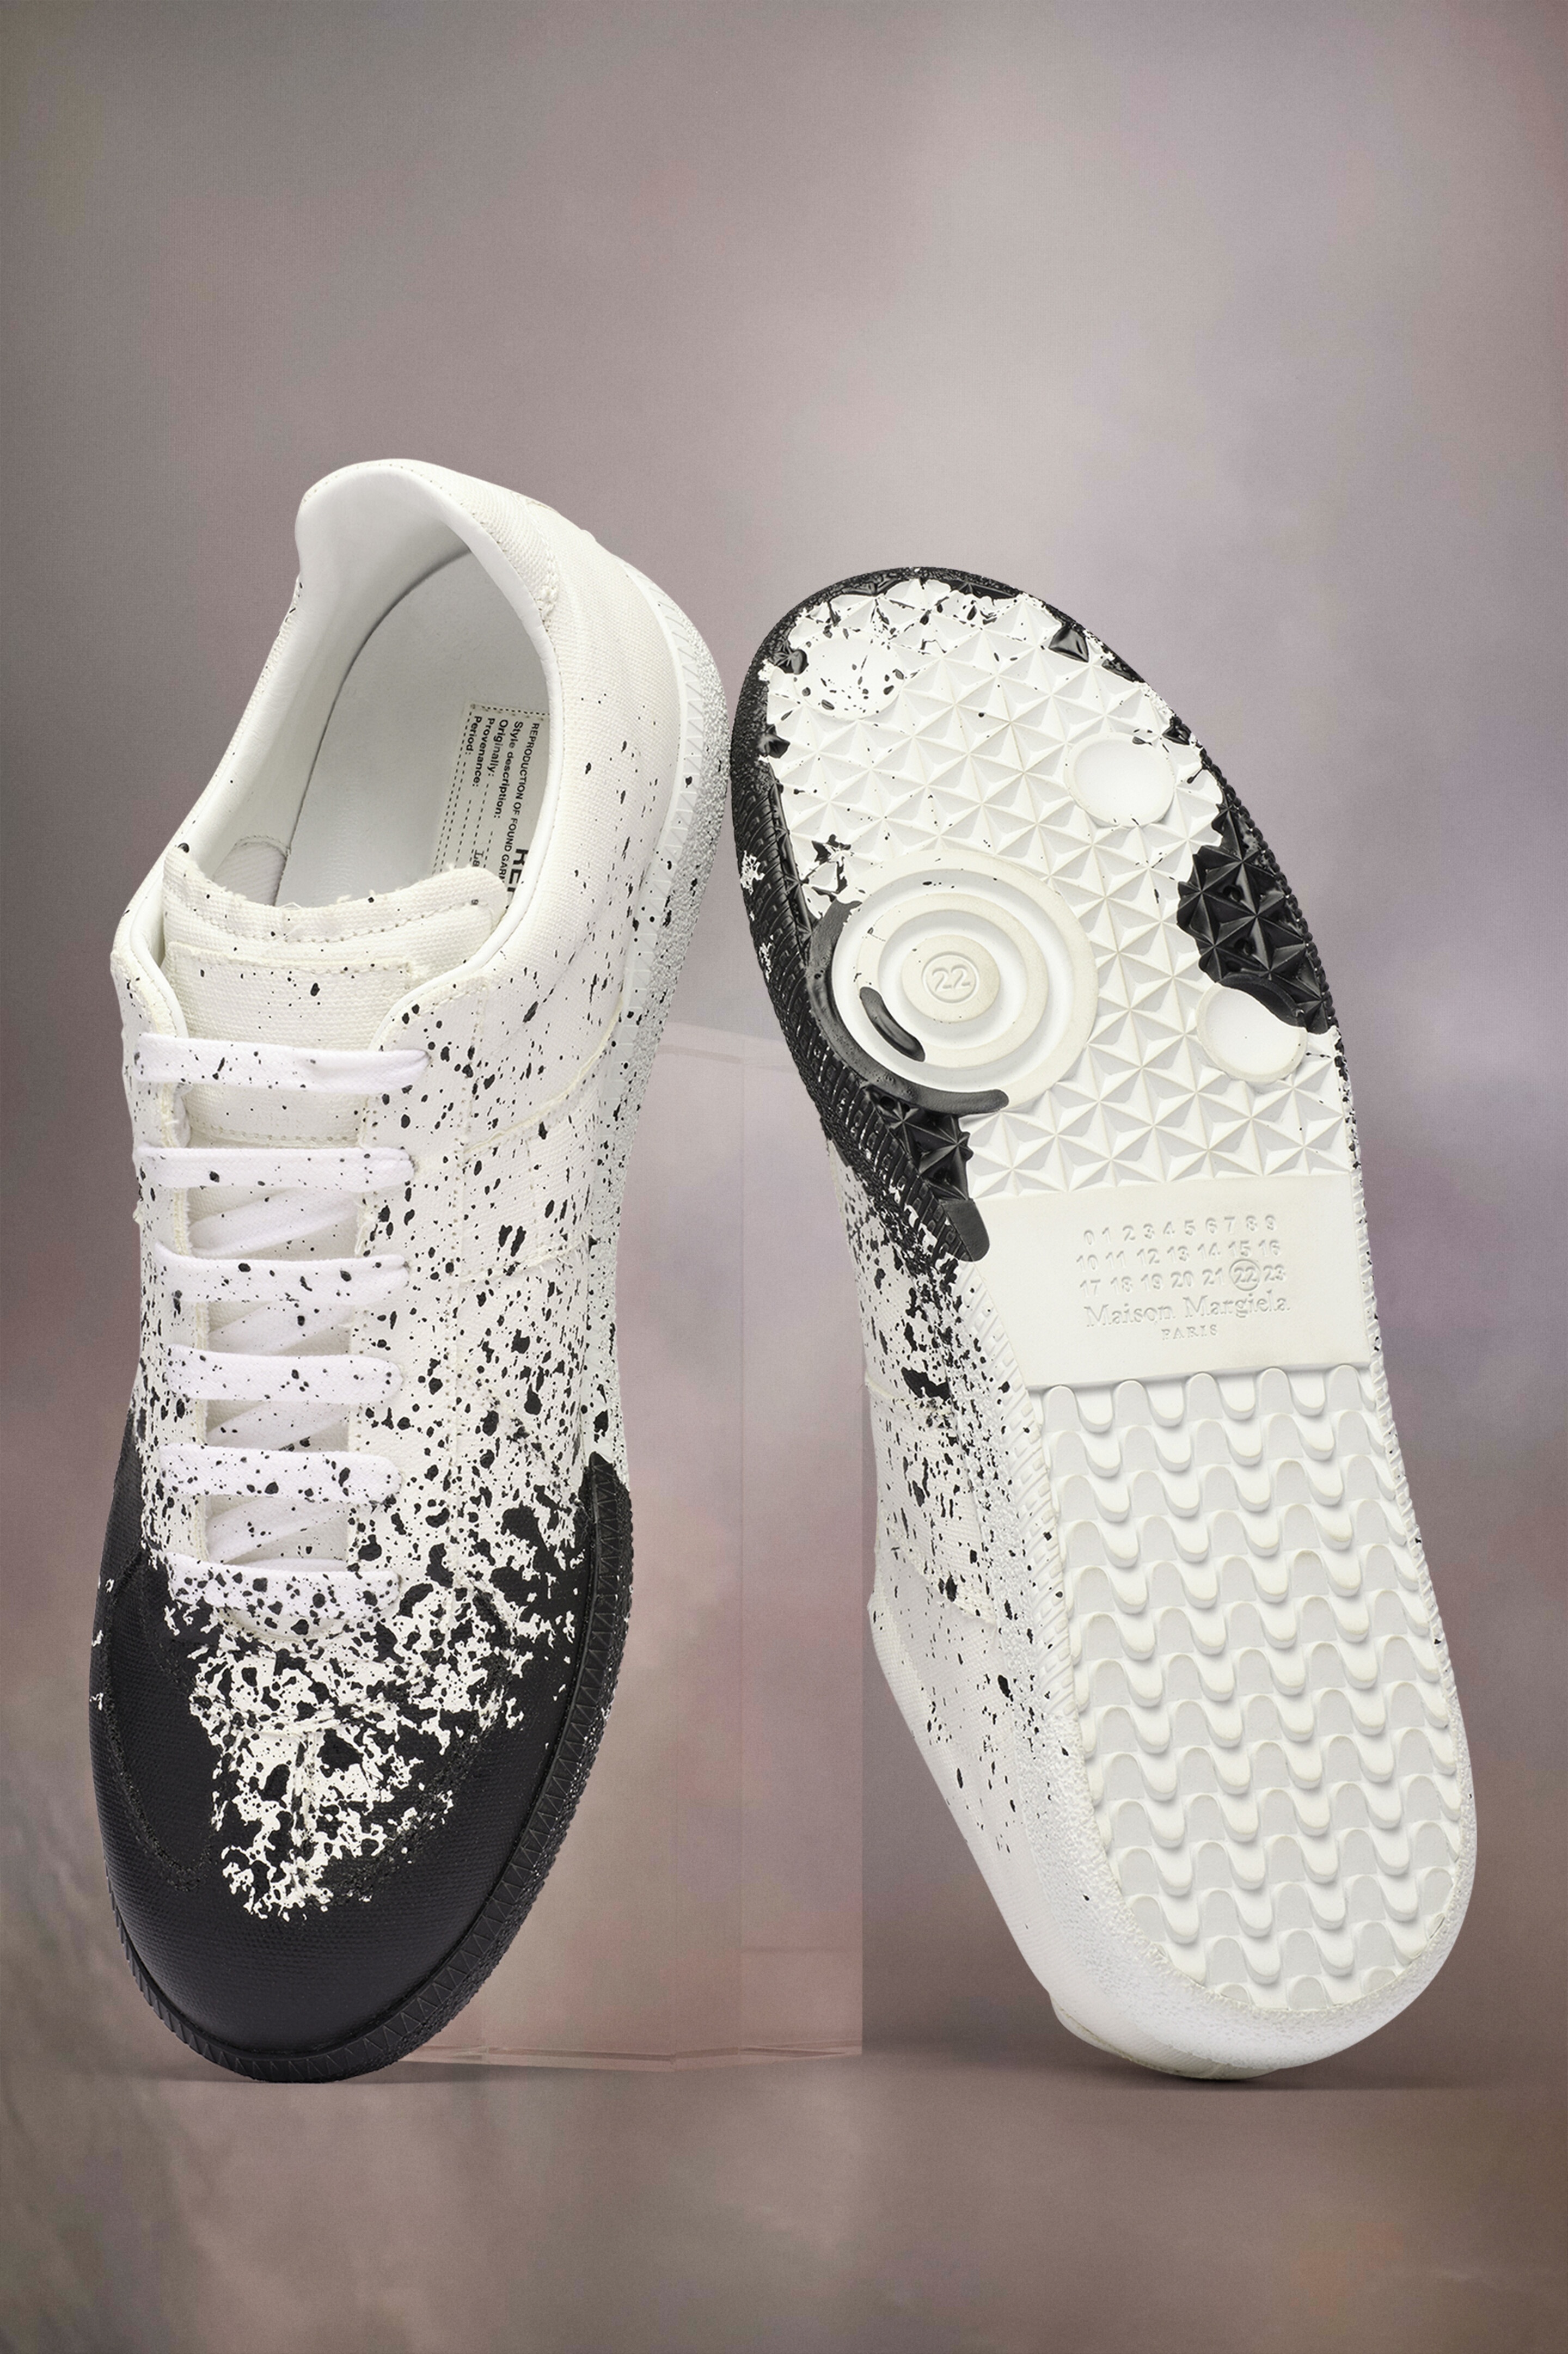 Paint Replica sneakers - 2